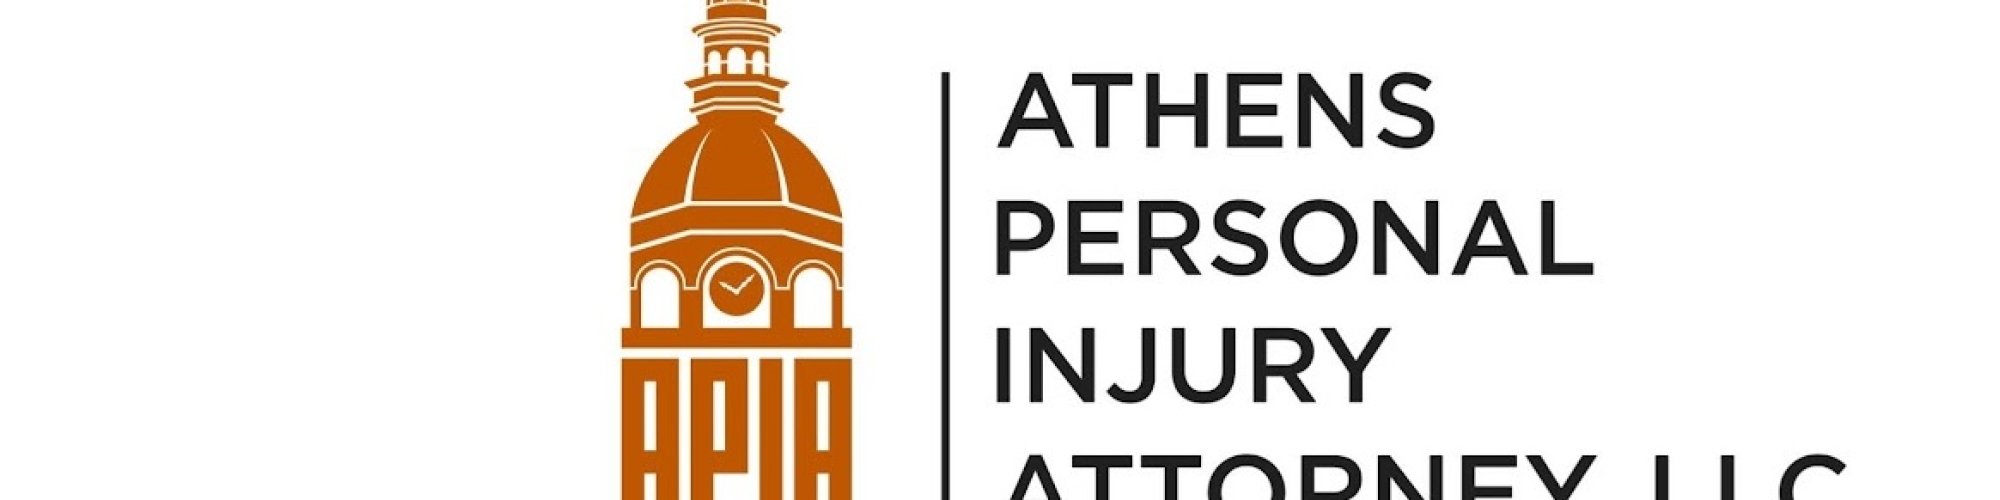 Athens Personal Injury Attorney, LLC